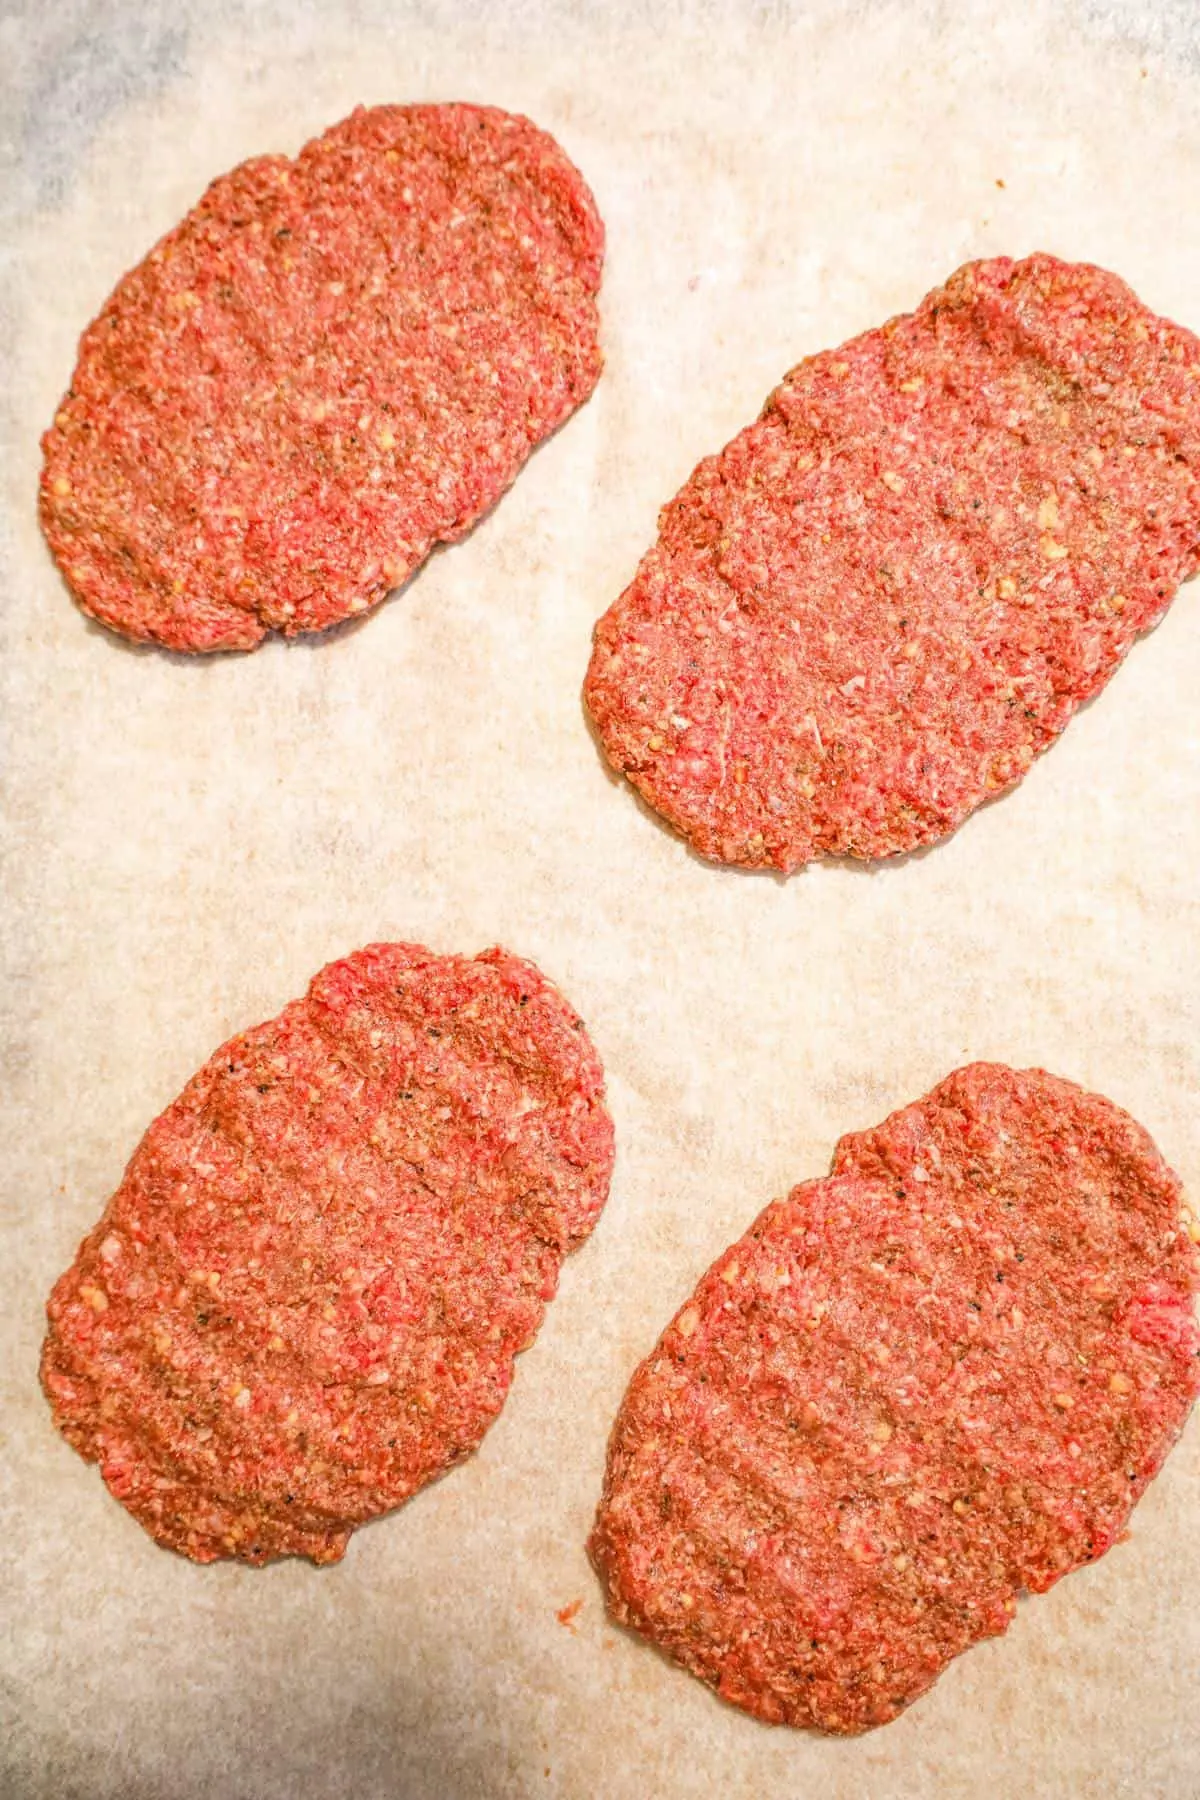 raw hamburger patties on parchment paper